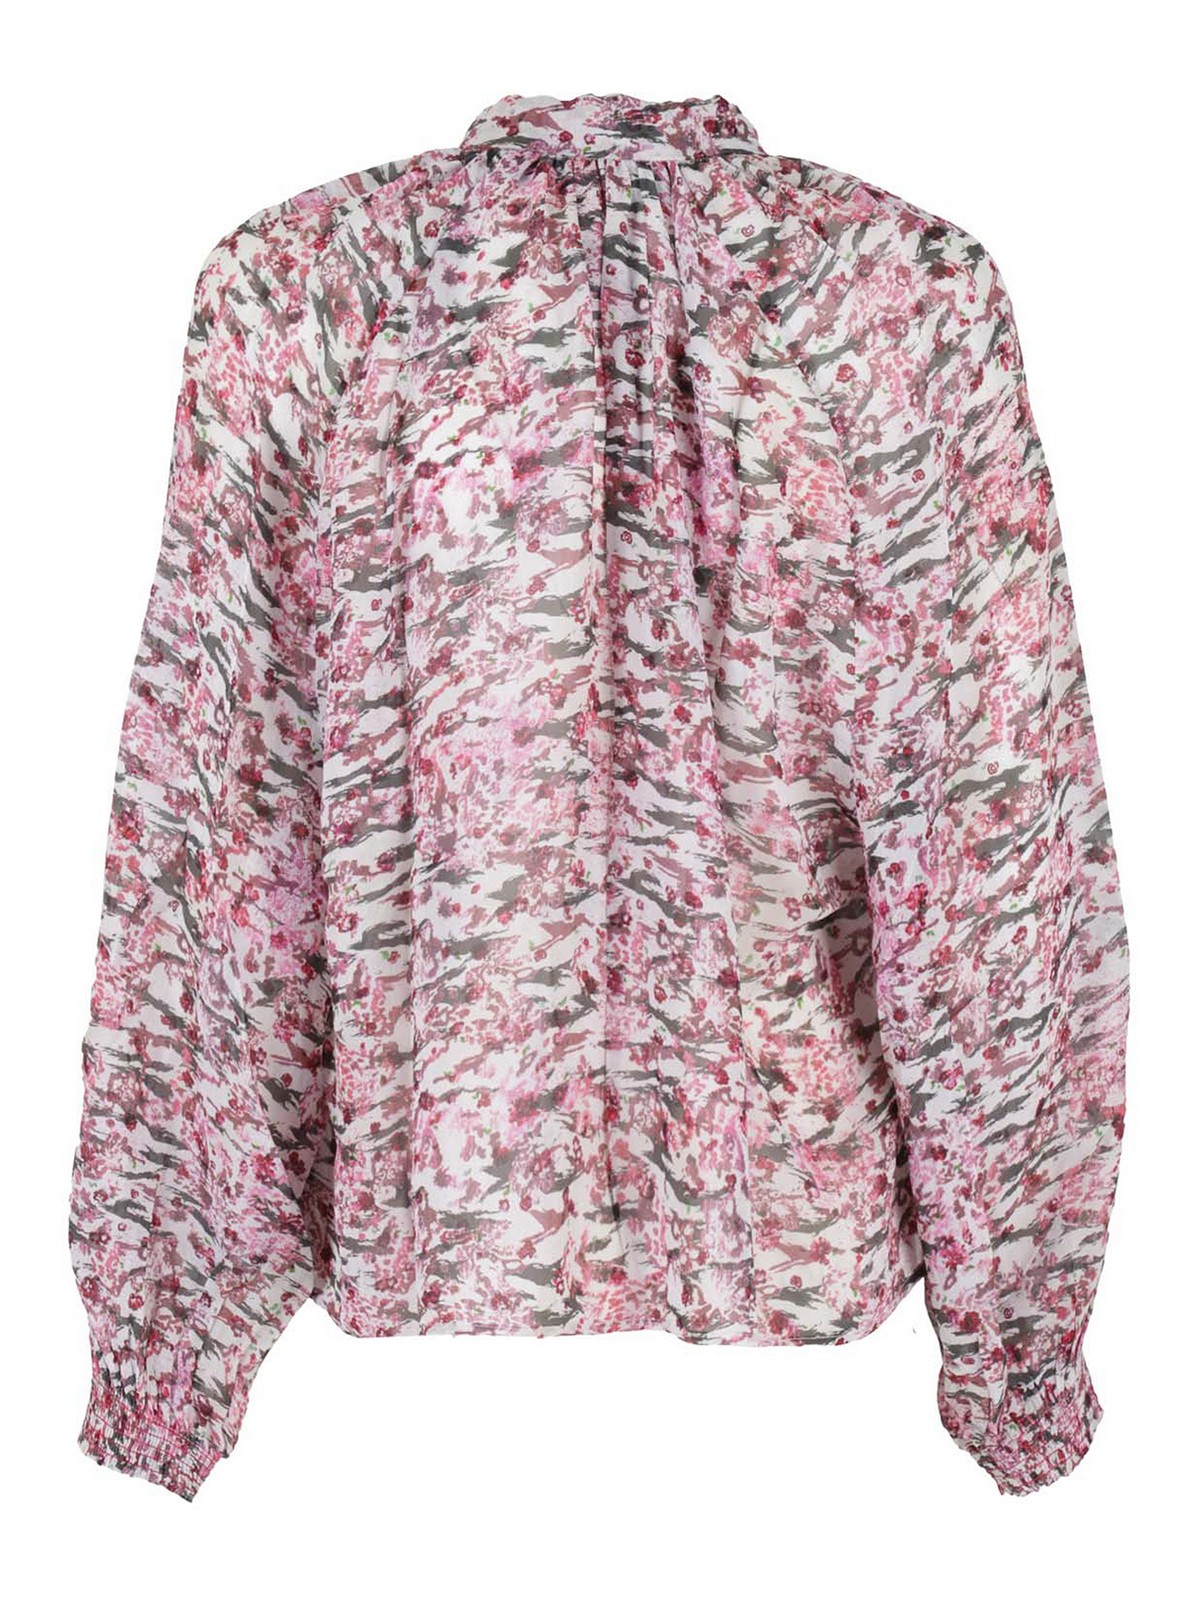 Blouses Iro - Vibrancy blouse - WM16VIBRANCYMUL07 | Shop online at iKRIX